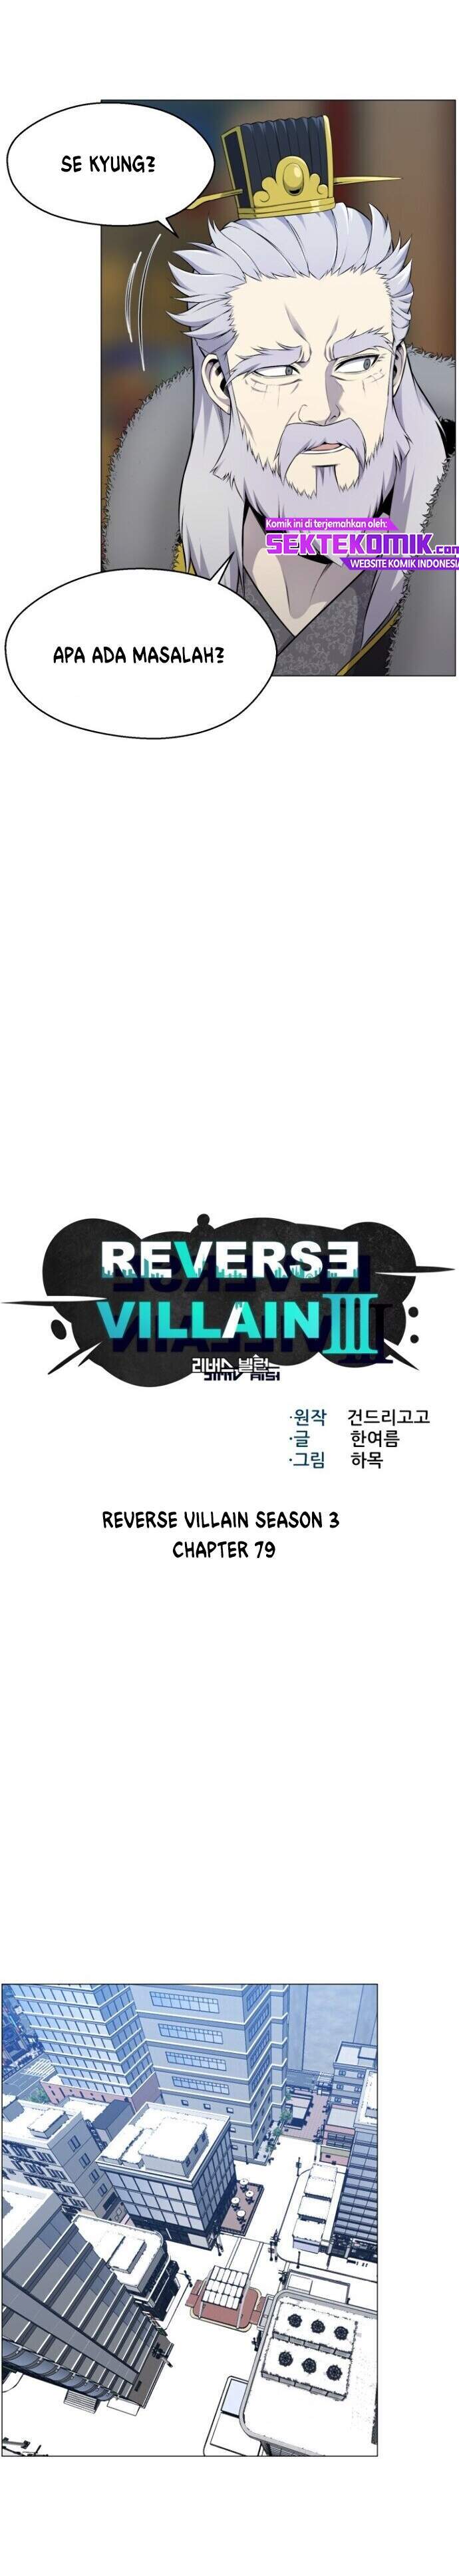 Reverse Villain Id Chapter 79 - 195